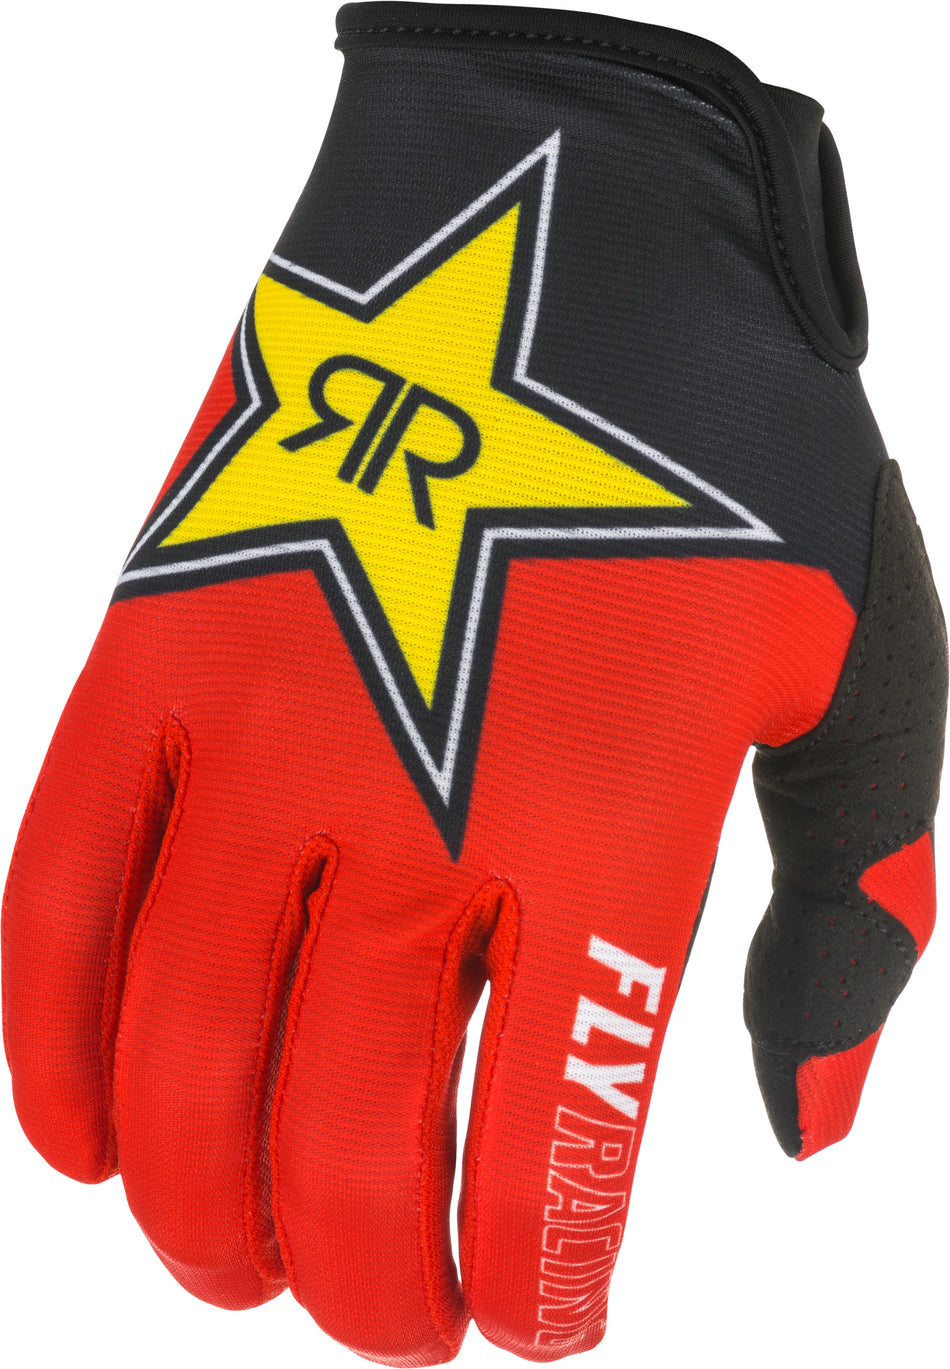 FLY RACING Lite Rockstar Gloves Black/Red/Yellow Sz 13 374-01313